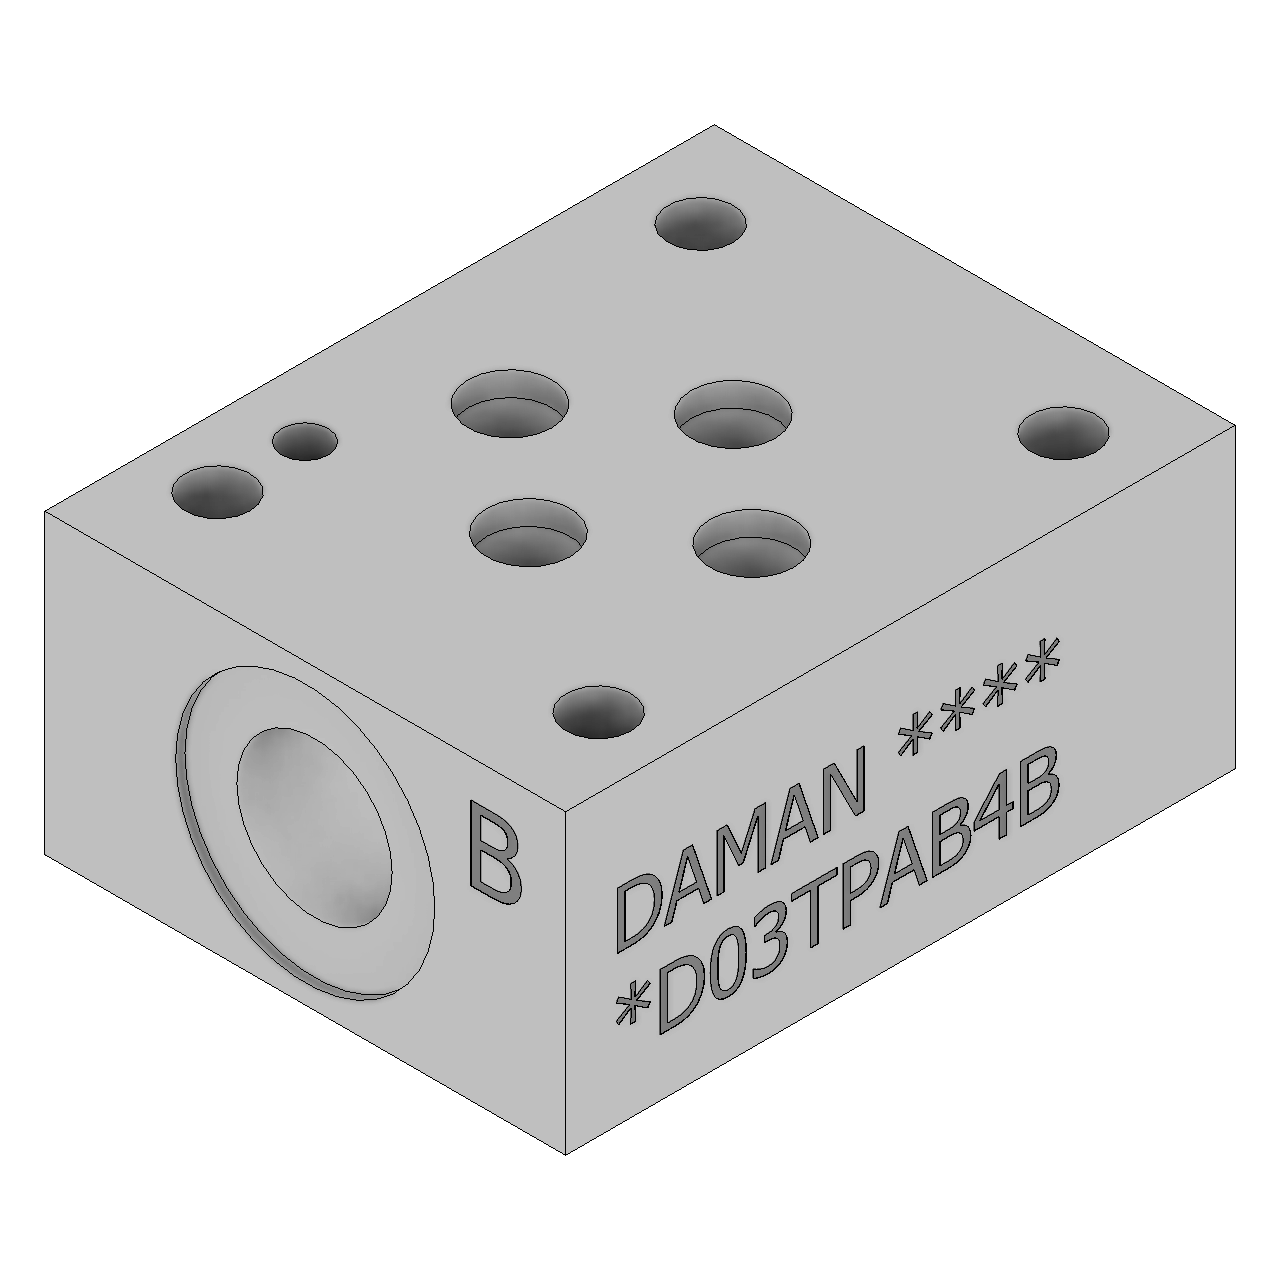 DD03TPAB4B - Tapping Plates